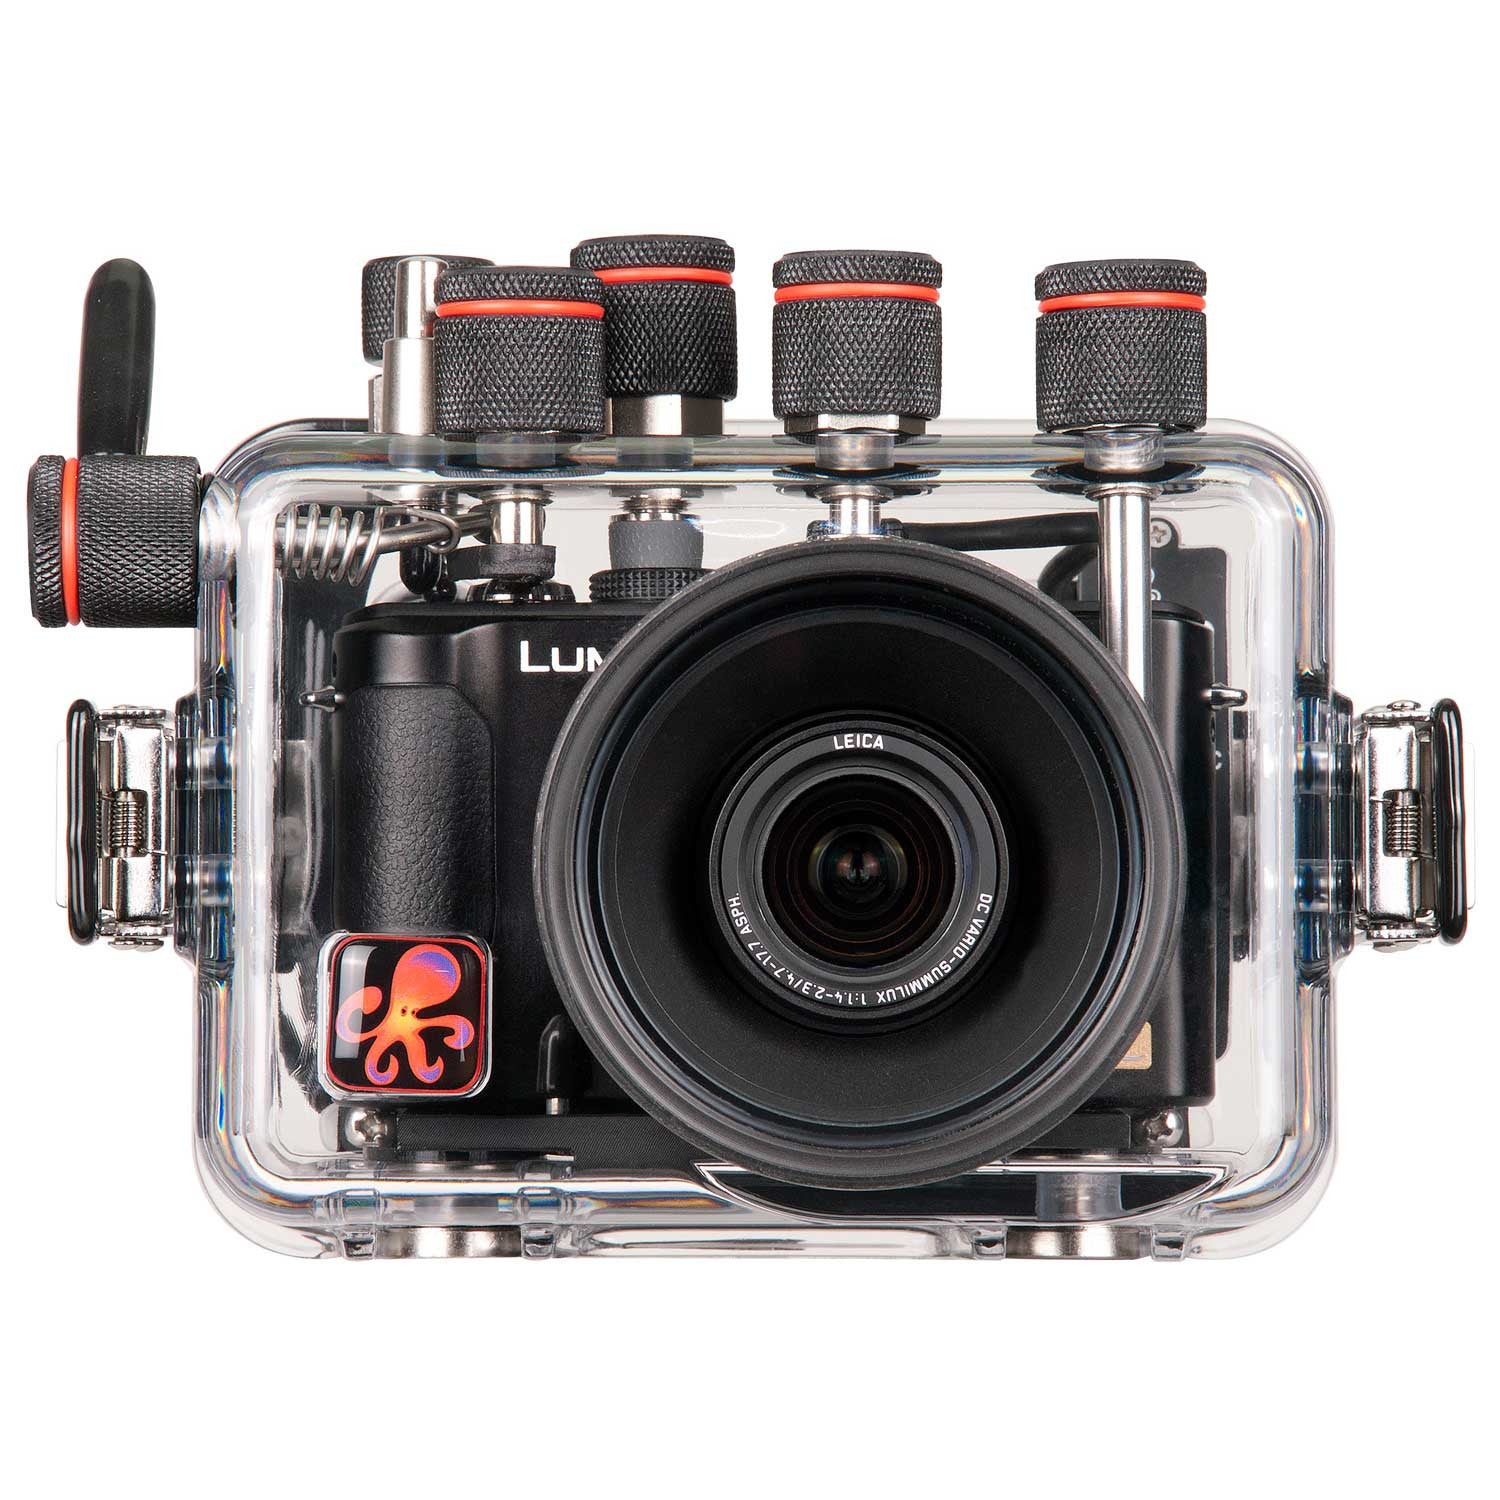 Underwater Housing for Panasonic Lumix LX7 Leica D-LUX 6